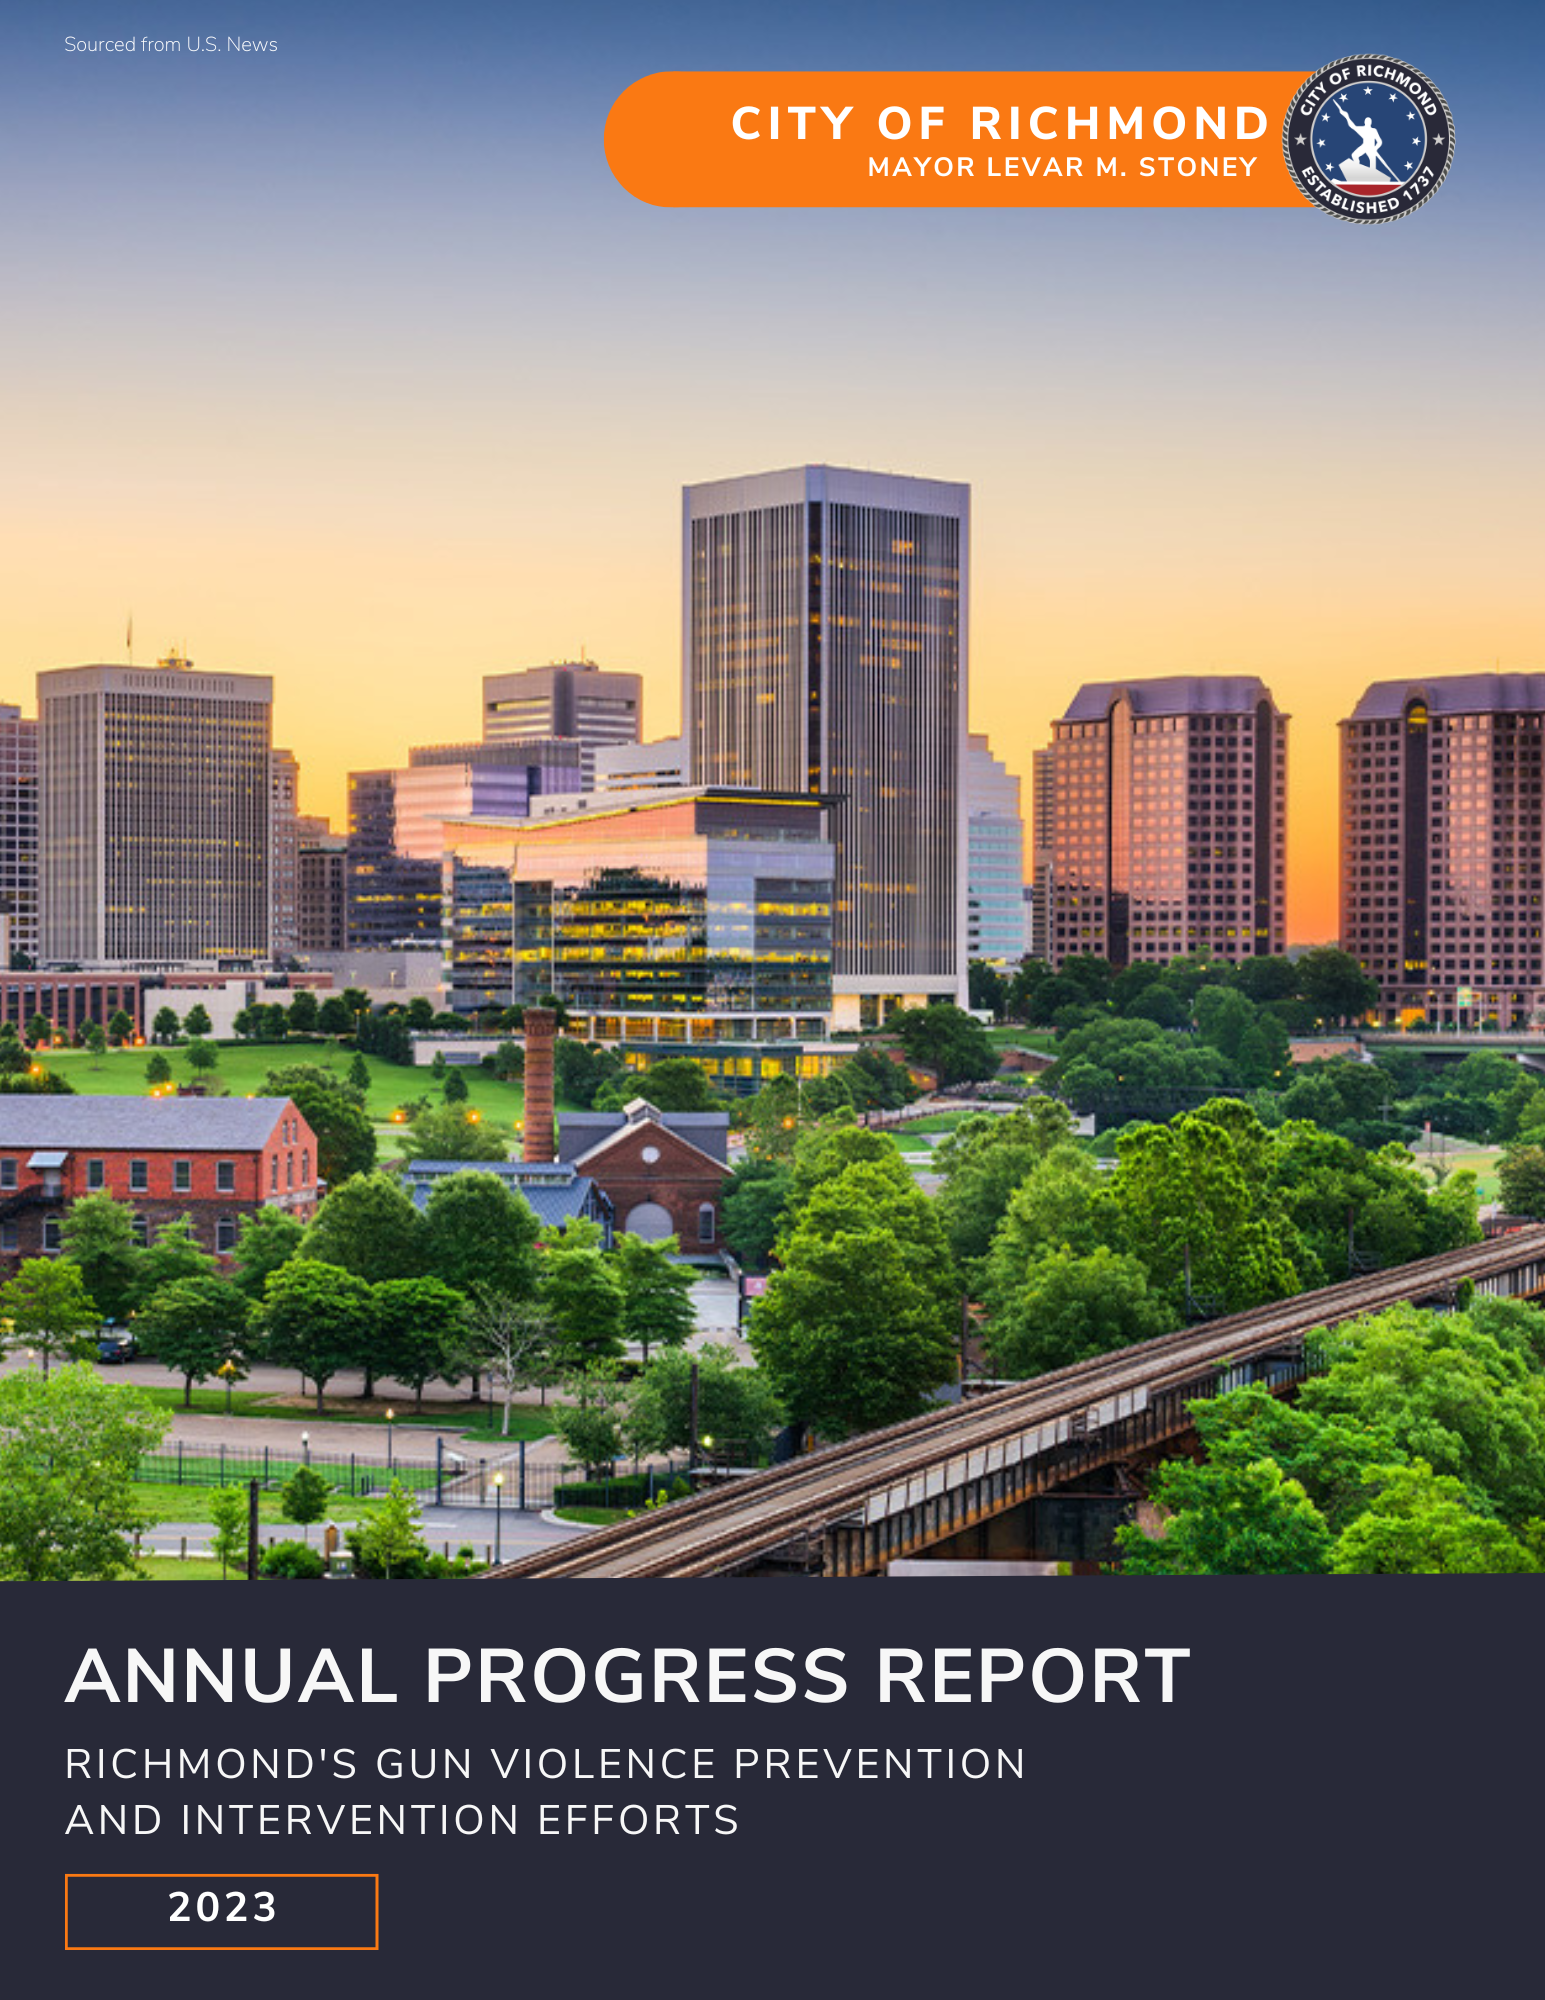 City of Richmond's 2023 Annual Progress Report